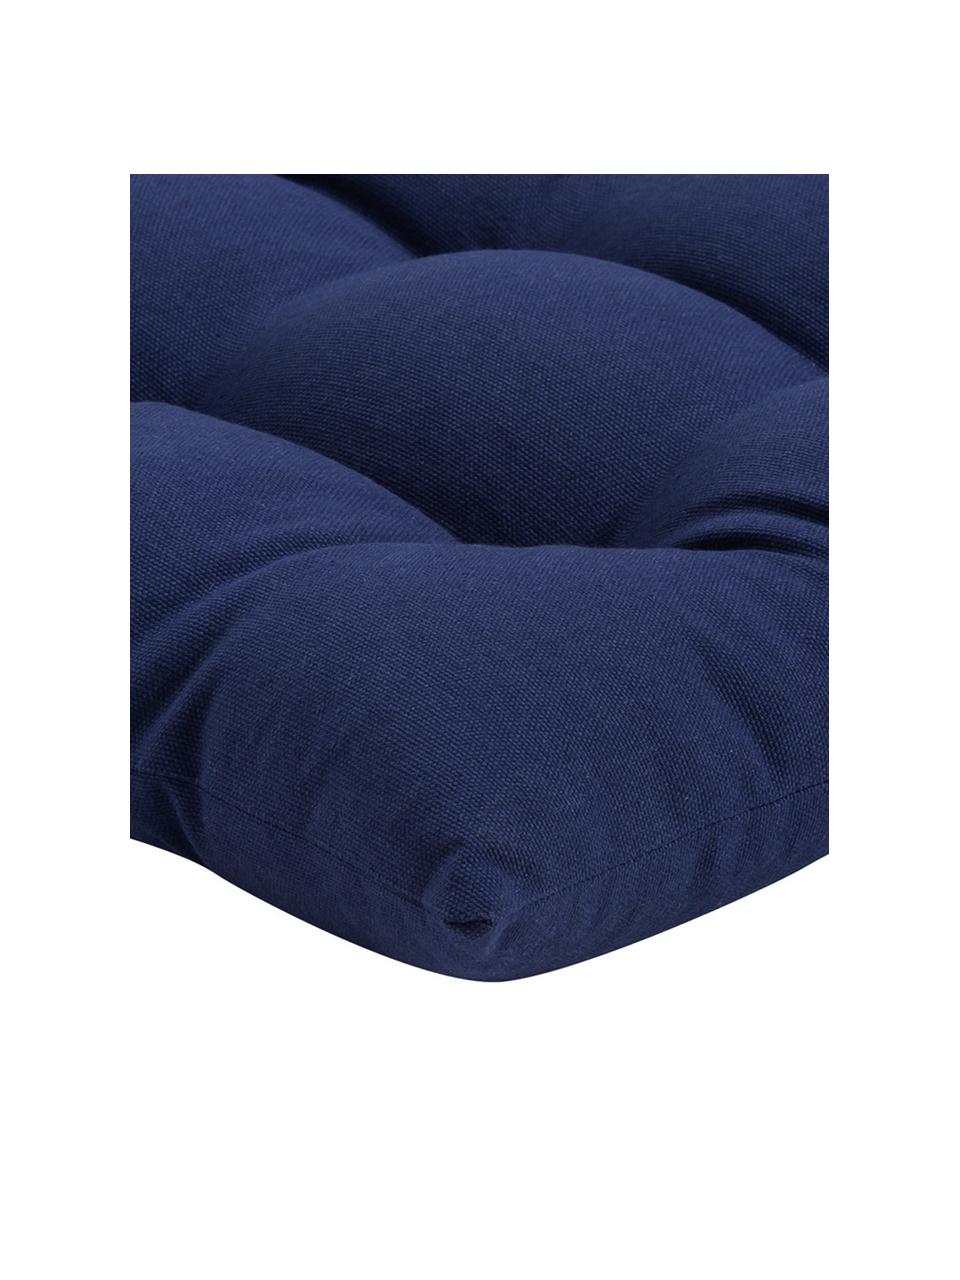 Sitzkissen Ava, Bezug: 100% Baumwolle, Dunkelblau, B 40 x L 40 cm